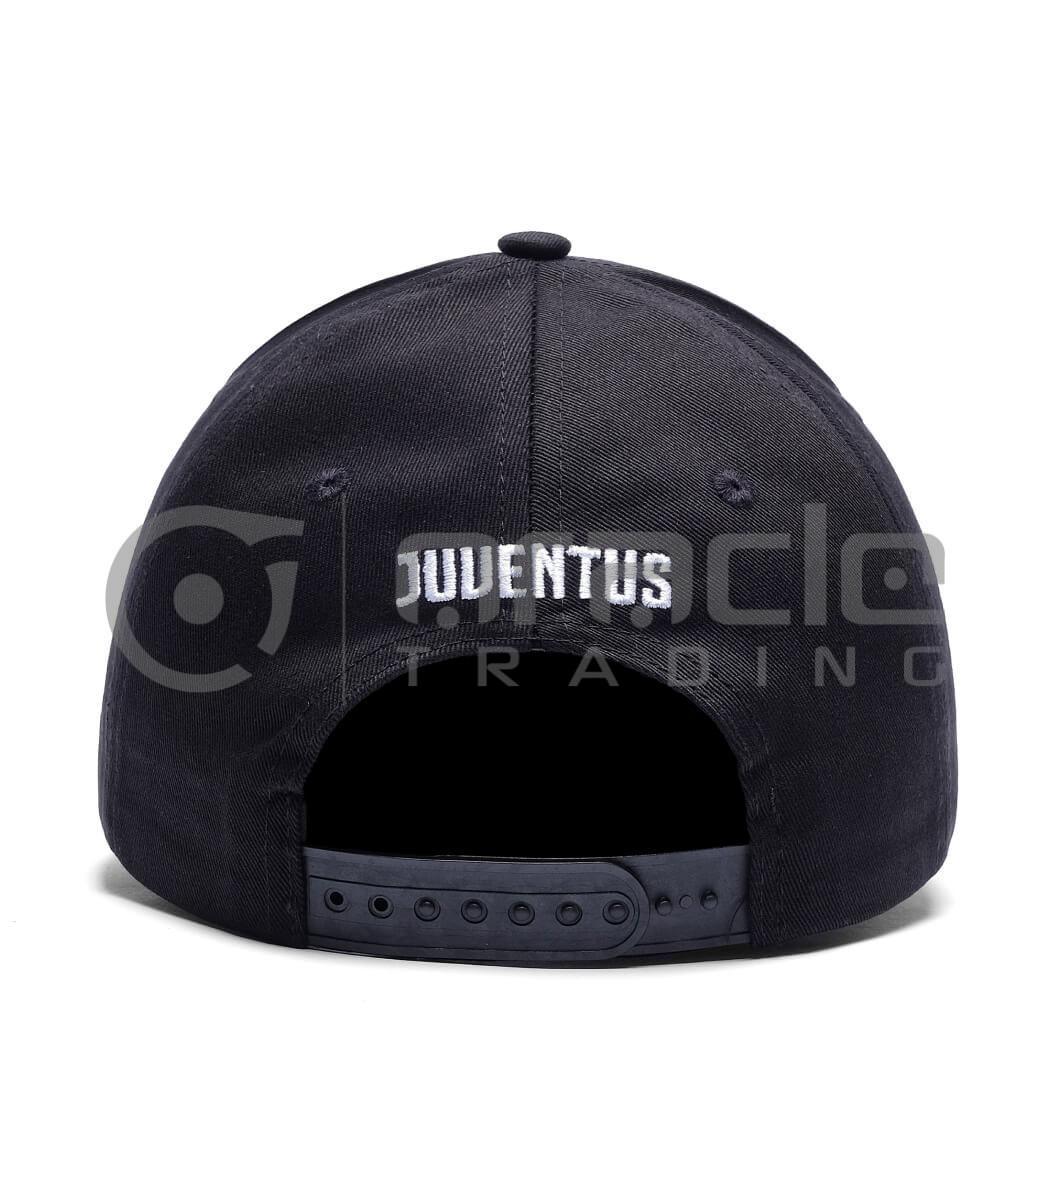 crest hat juventus black hat036 b